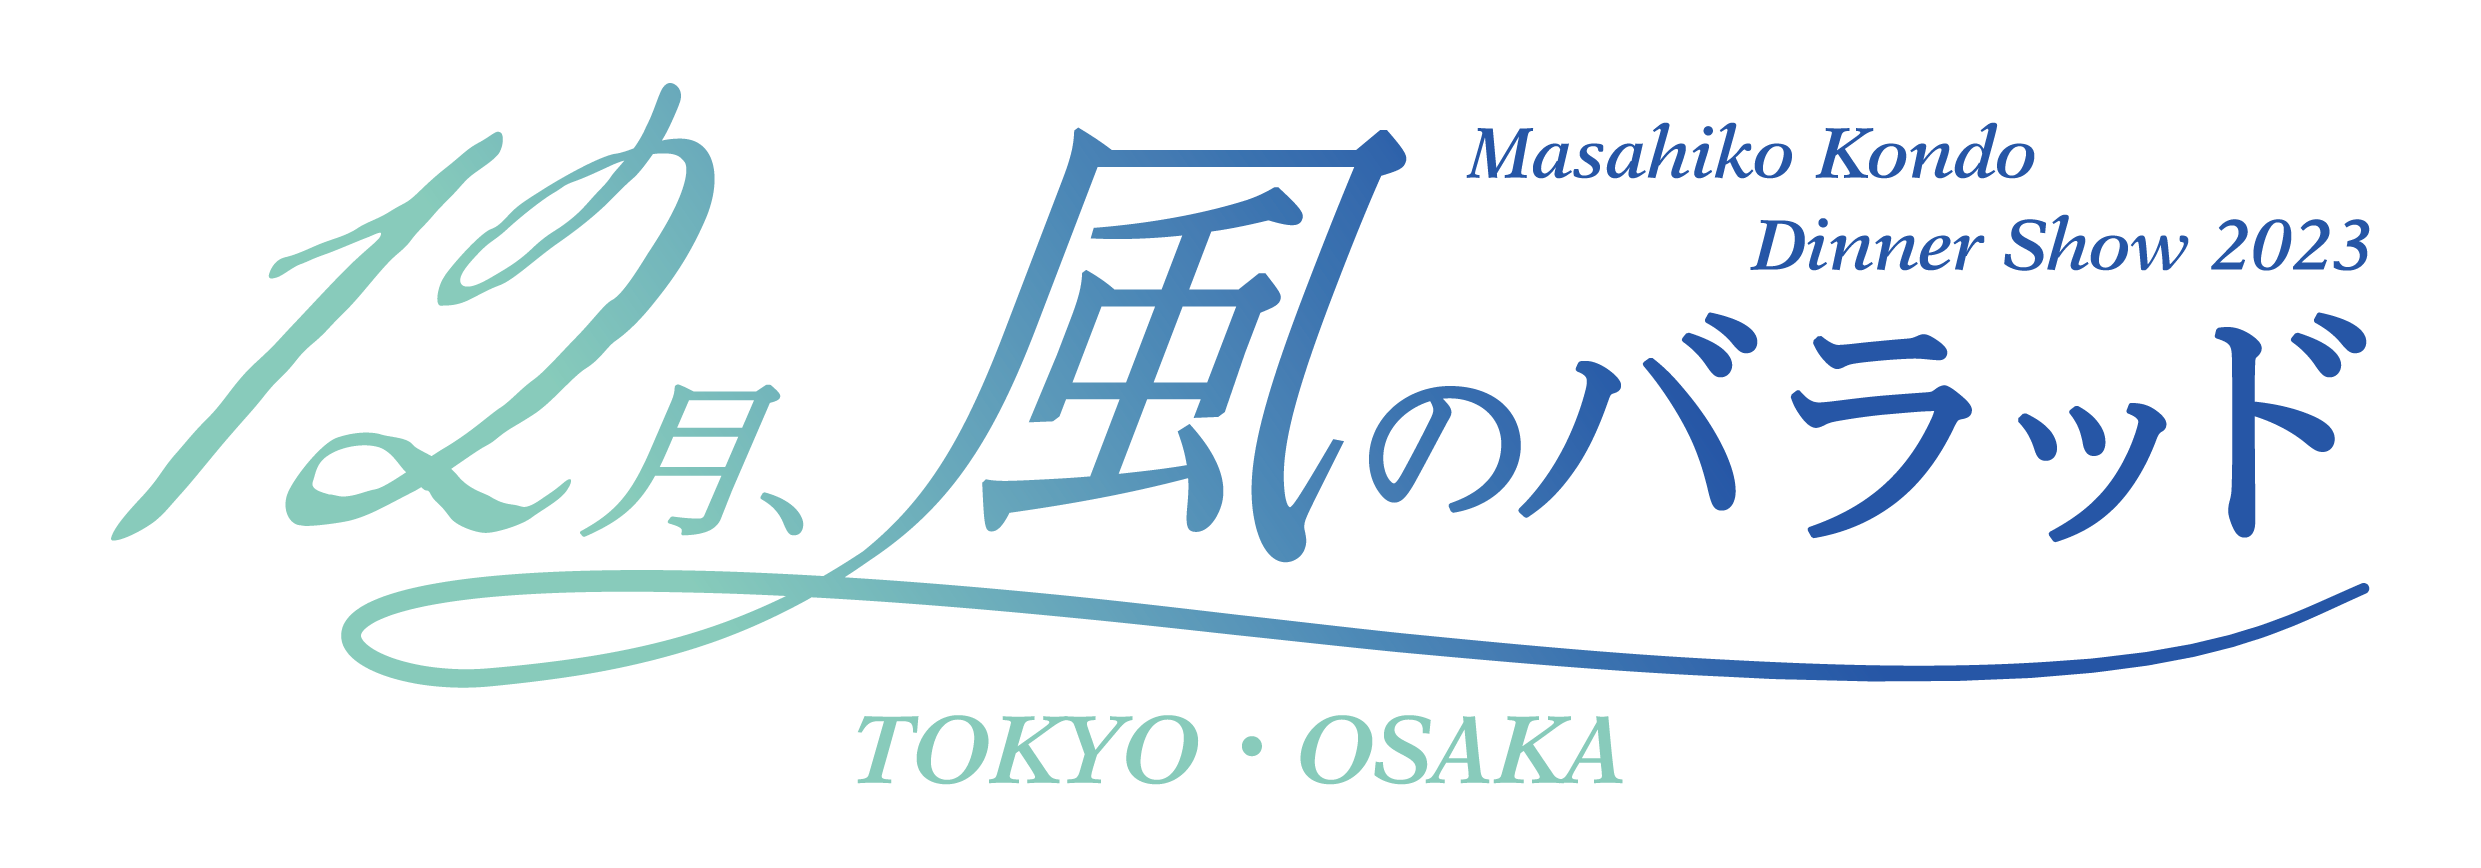 Masahiko Kondo Dinner Show 2023 「12月、風のバラッド」 TOKYO.OSAKA 